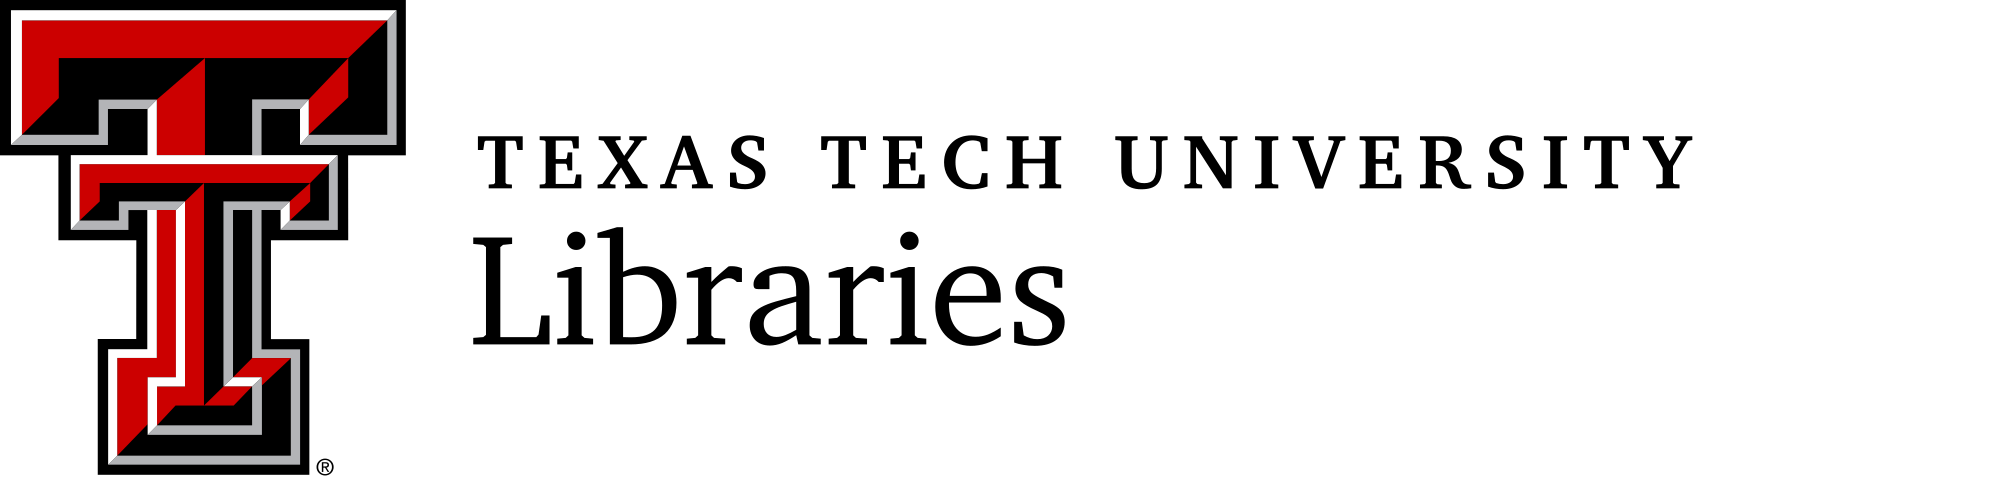 Texas Tech University Logo - File:Texas Tech University Libraries logo.svg - Wikimedia Commons